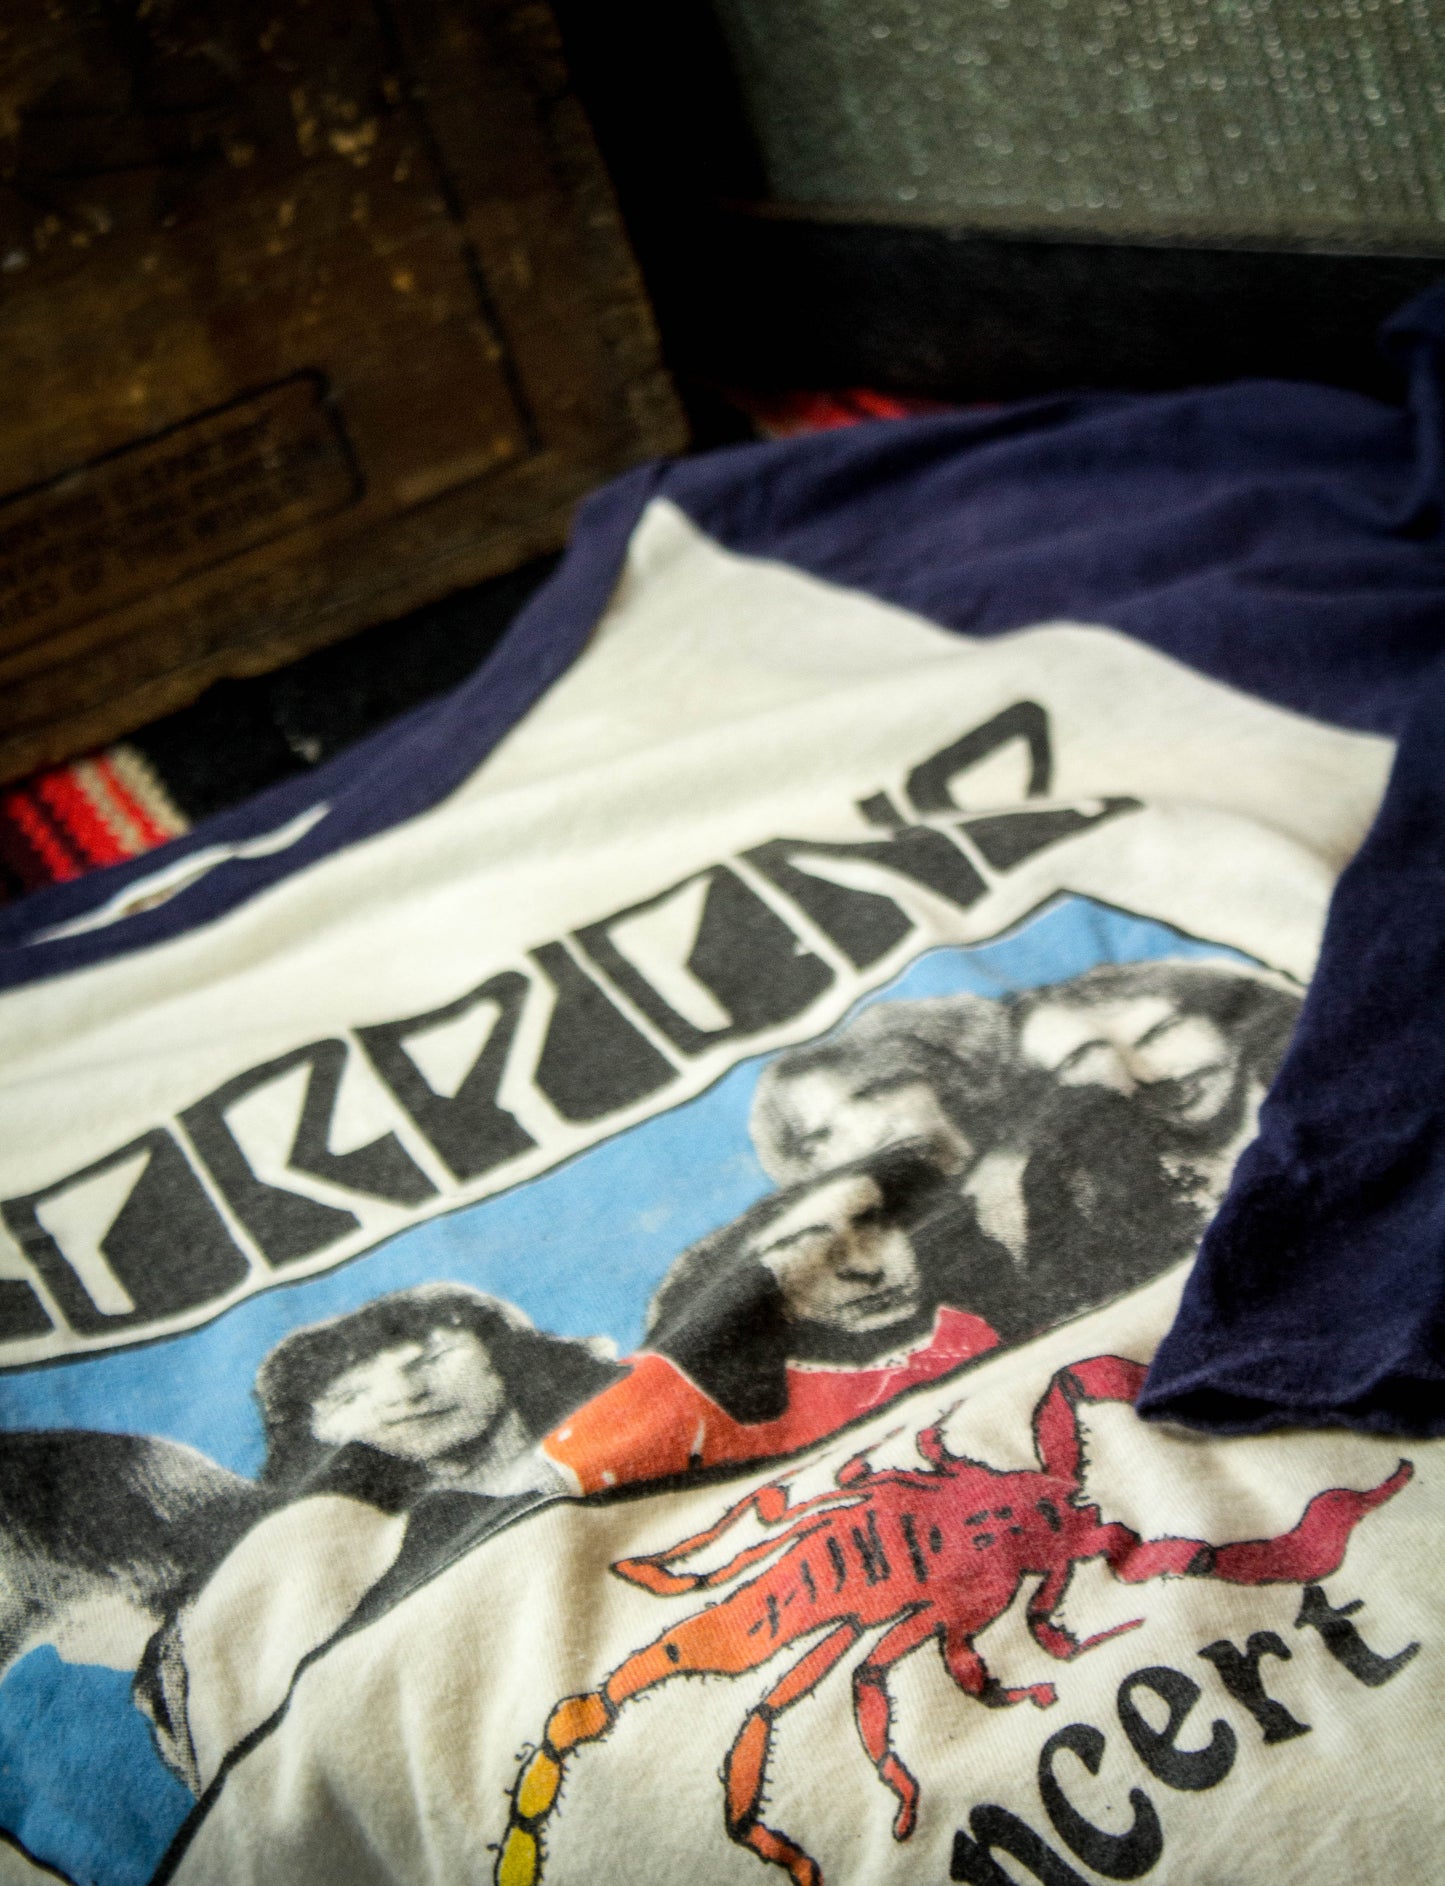 Vintage 80s Scorpions On Tour Bootleg Concert T Shirt Unisex Medium